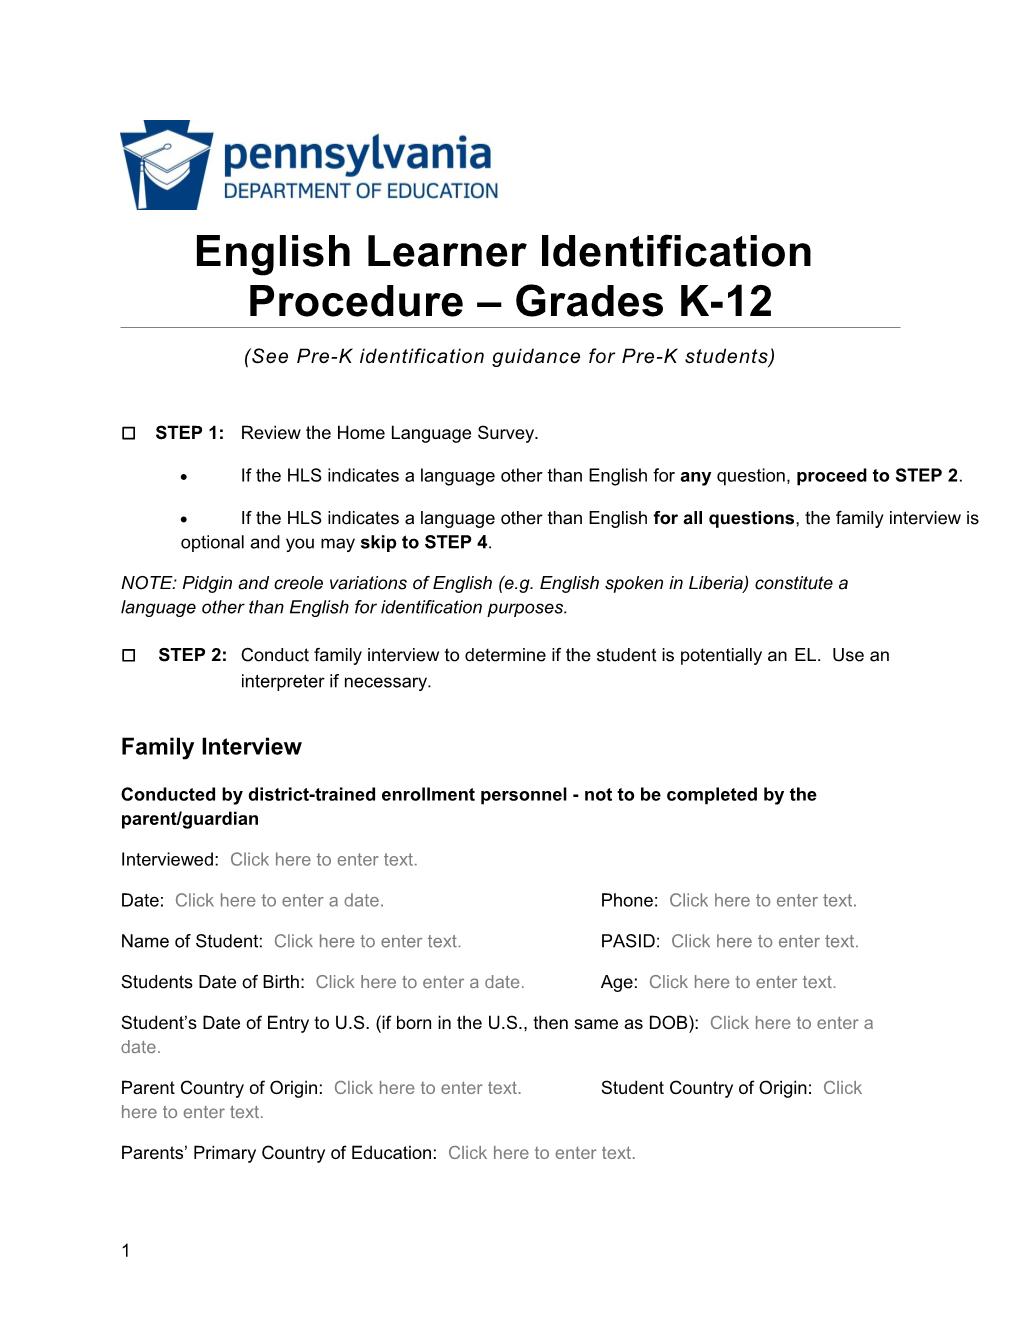 English Learner Identification Procedure - Grades K-12